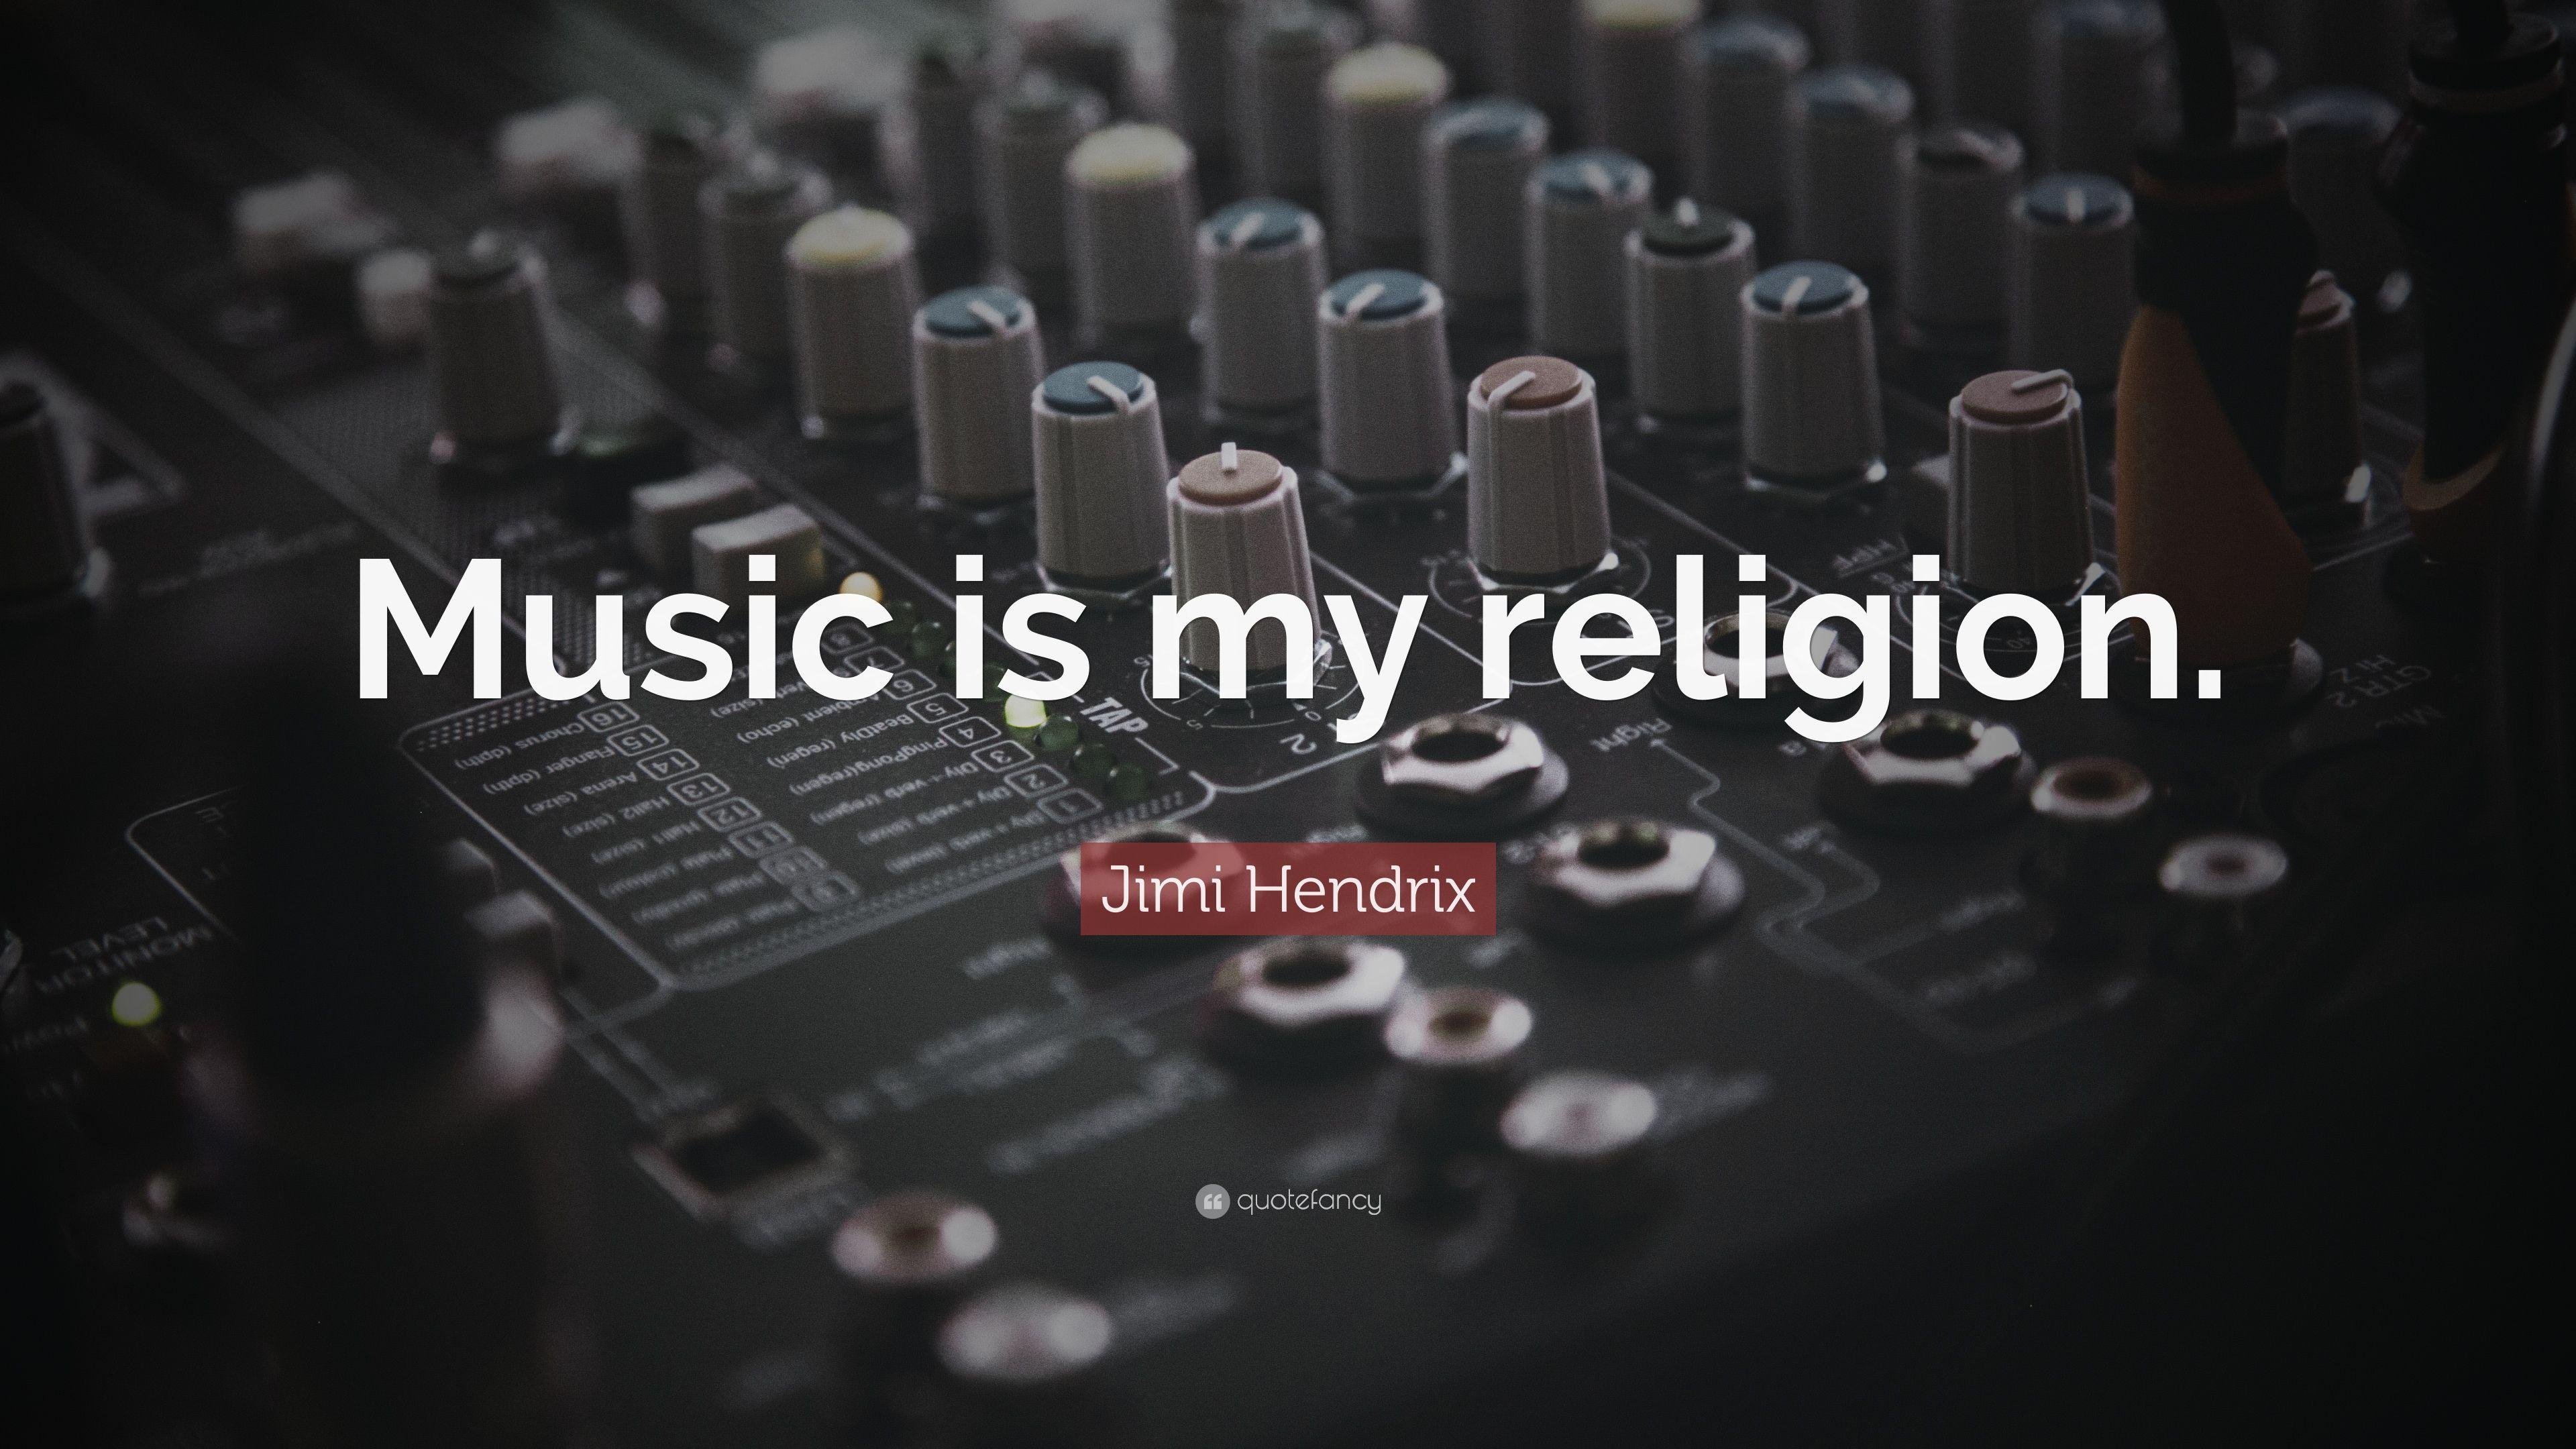 Jimi Hendrix Quote: “Music is my religion.” 17 wallpaper